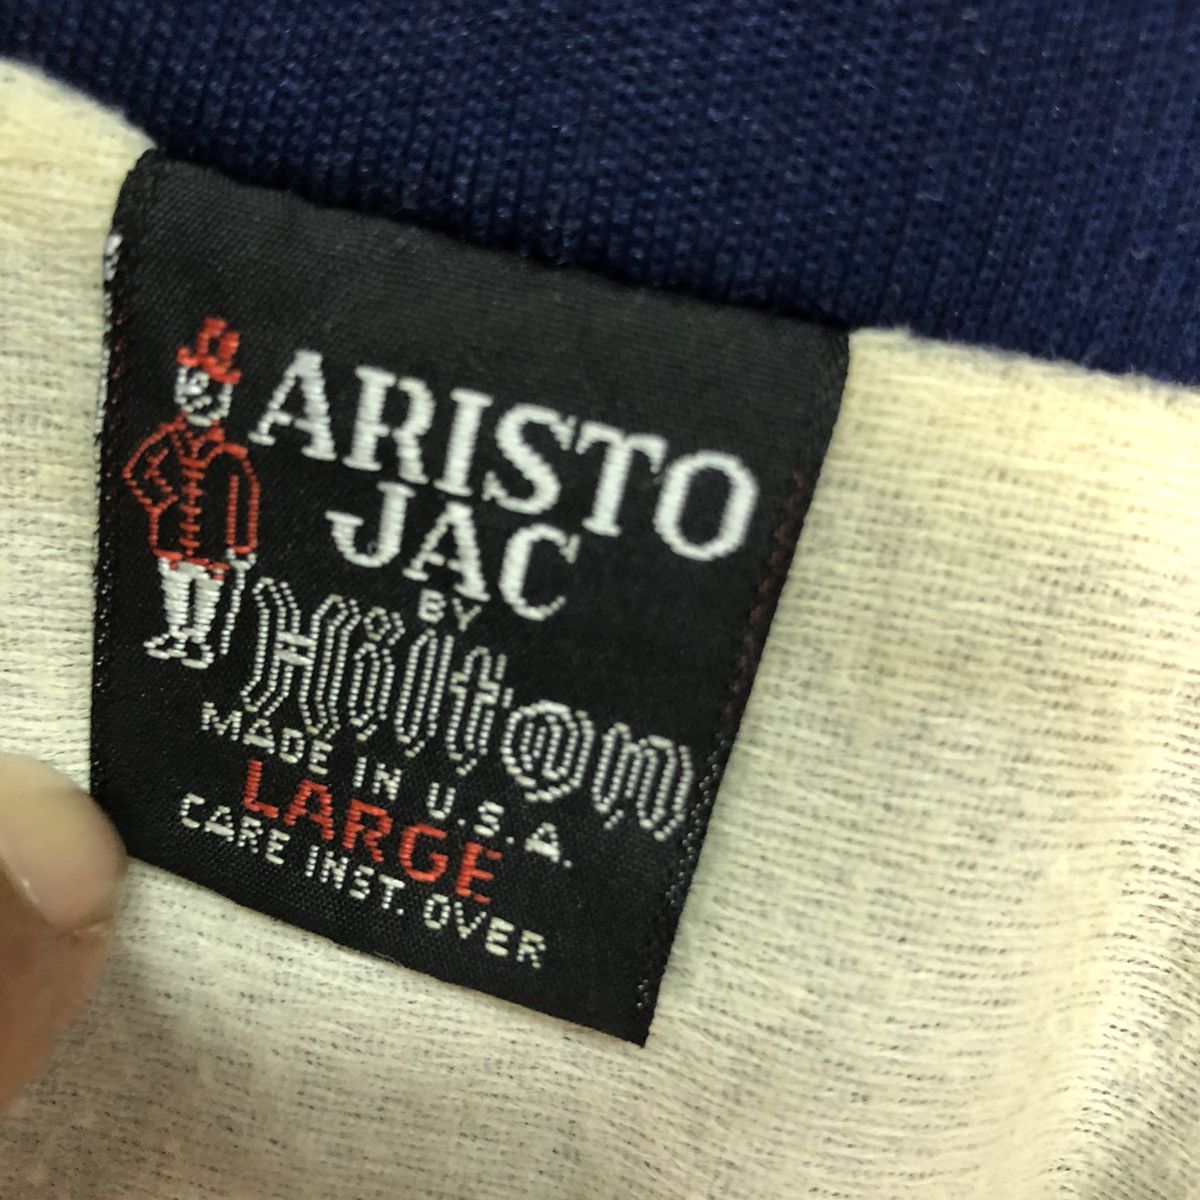 Made In Usa Aristo Jac By Hilton Bomber Zipper Jacket Size US L / EU 52-54 / 3 - 7 Thumbnail